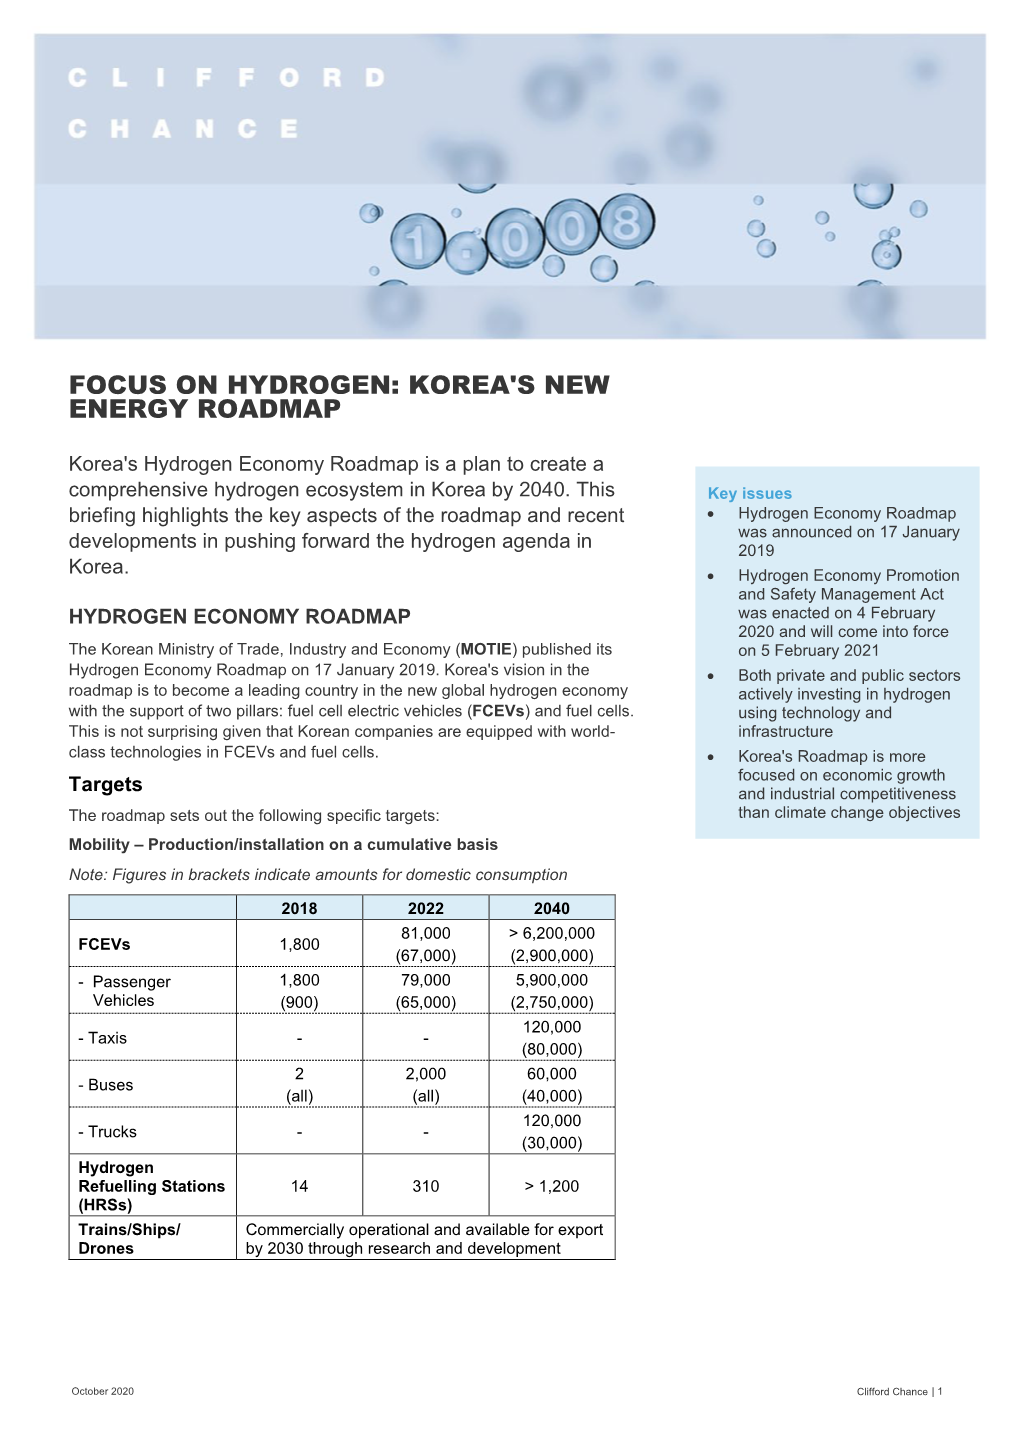 Focus on Hydrogen: Korea's New Energy Roadmap